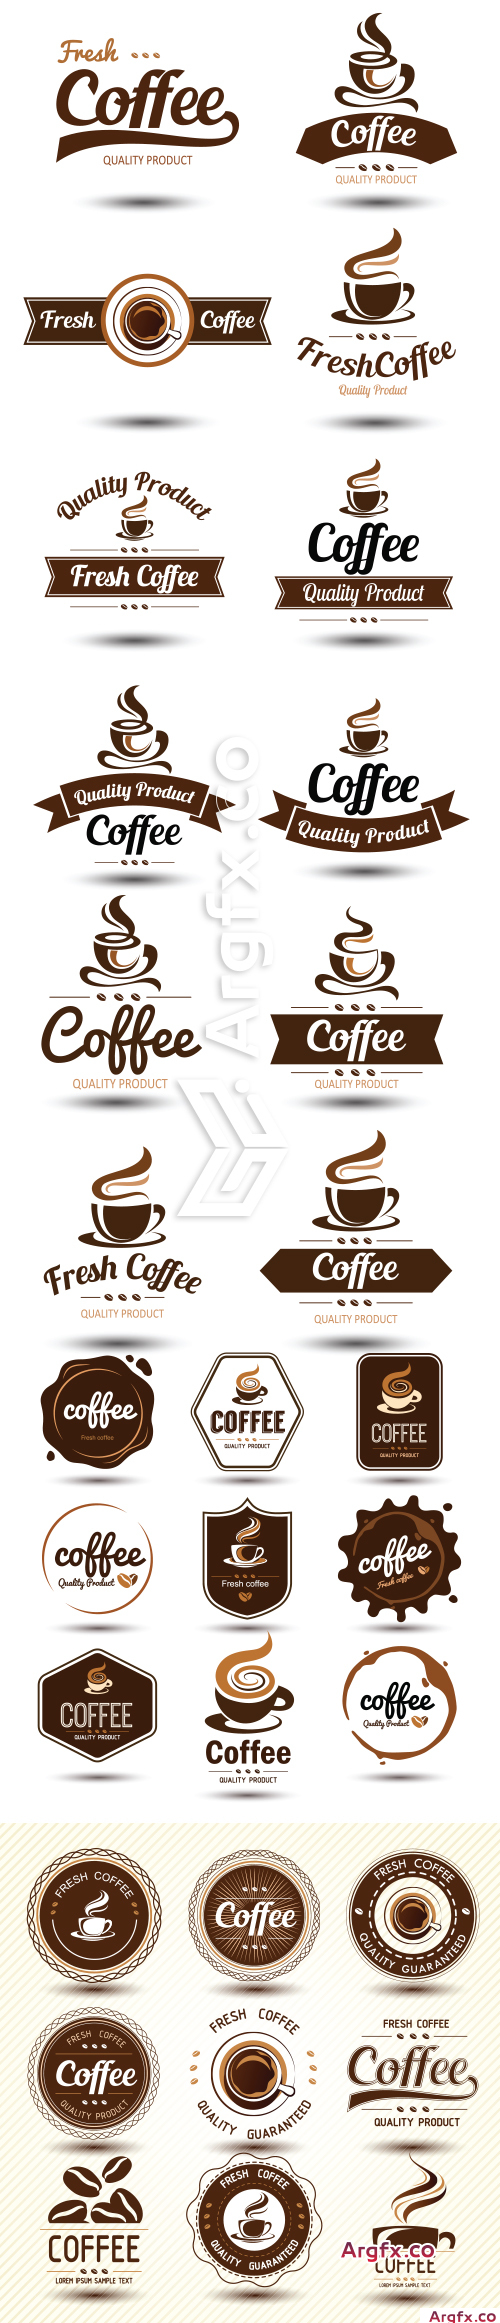 datalife-engine-printable-version-coffee-vector-label